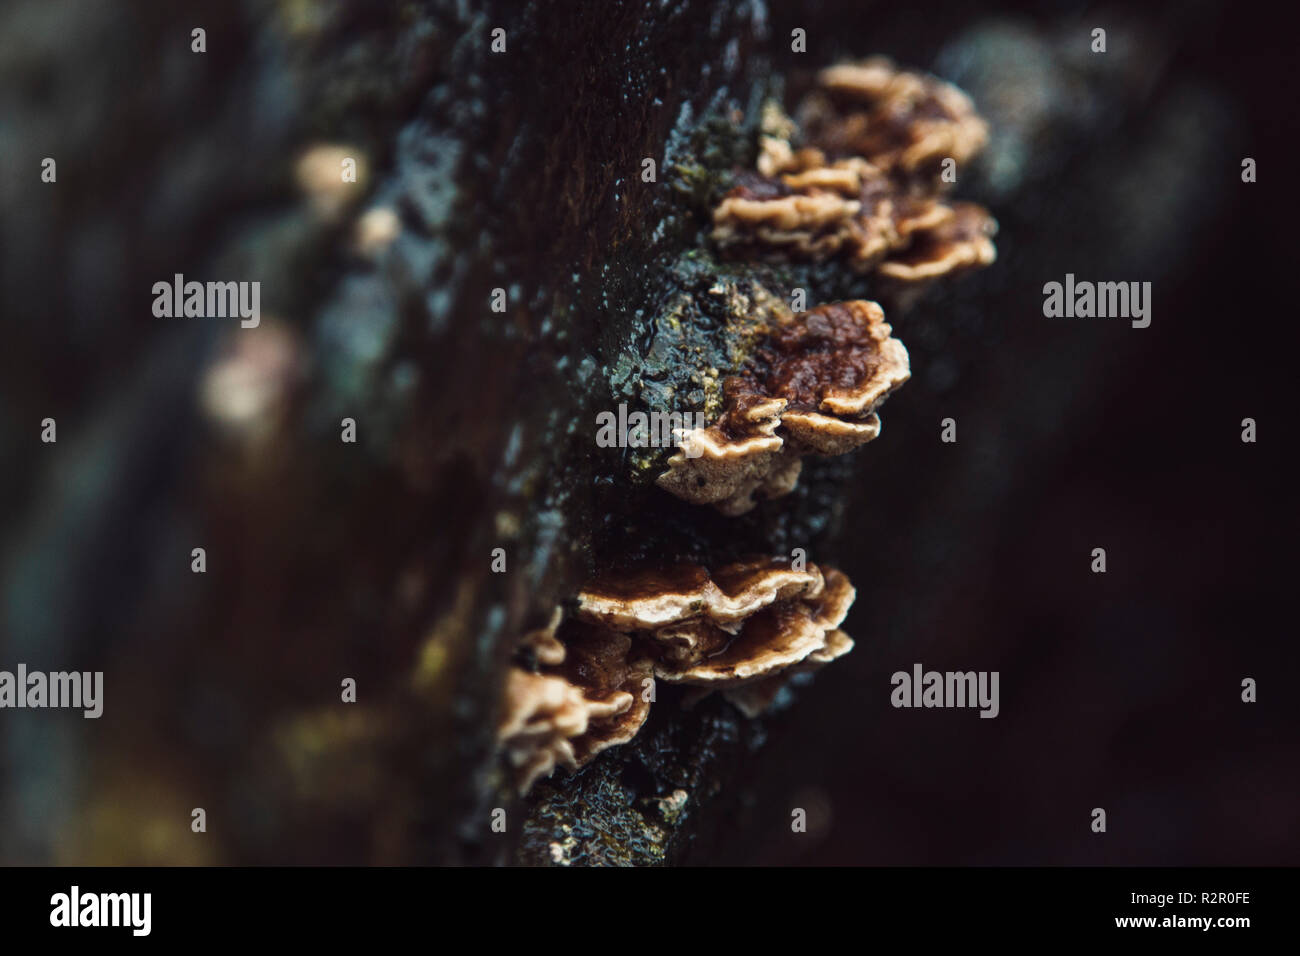 Tree fungi after rainfall Stock Photo